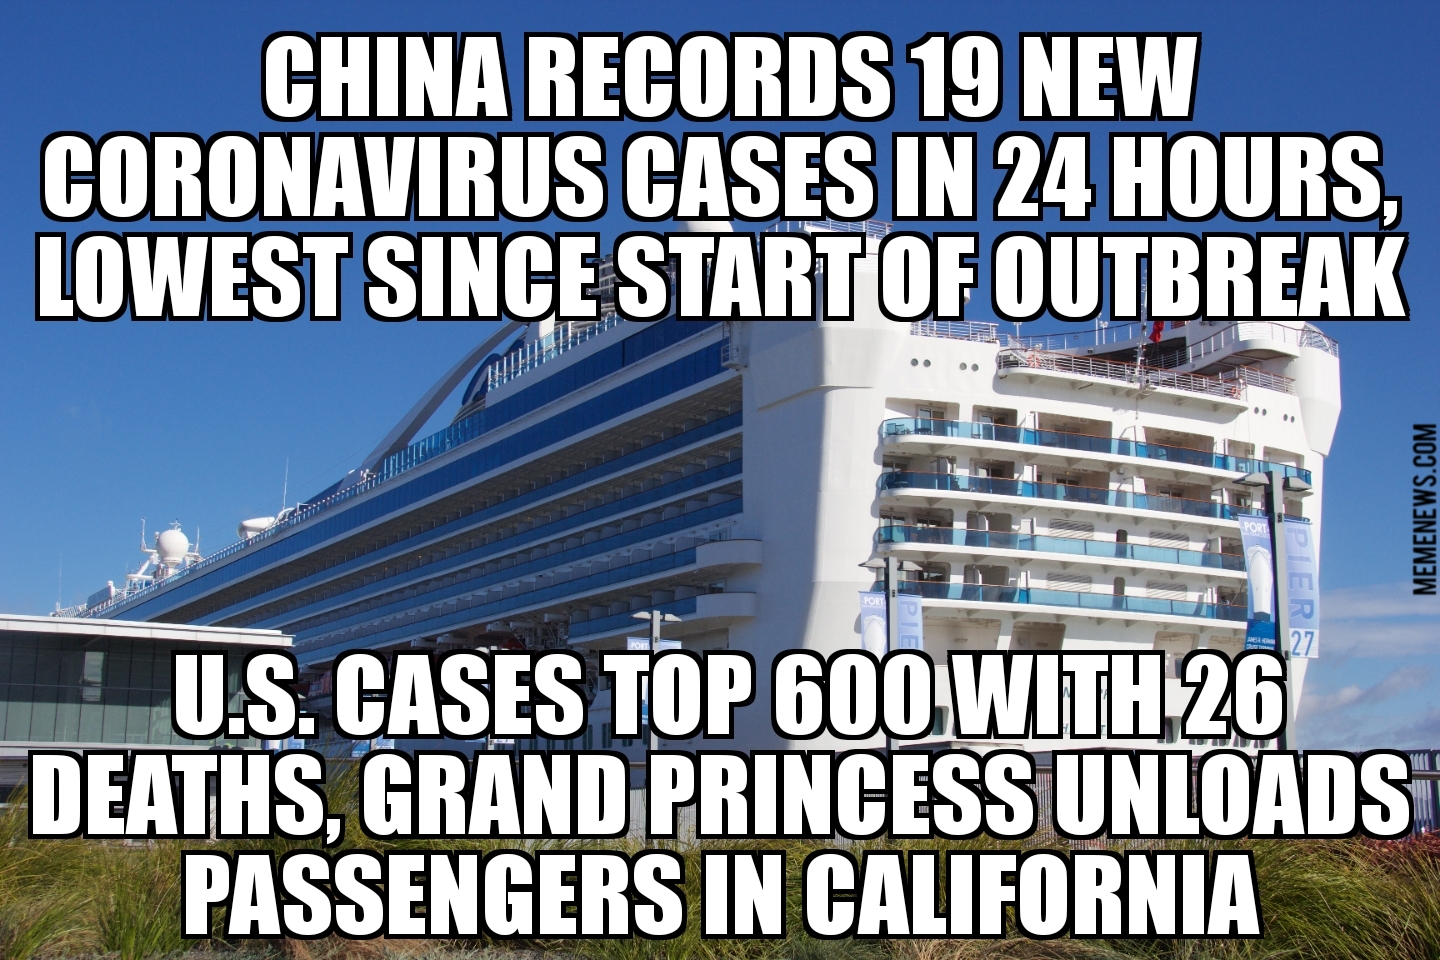 China posts record low new coronavirus cases